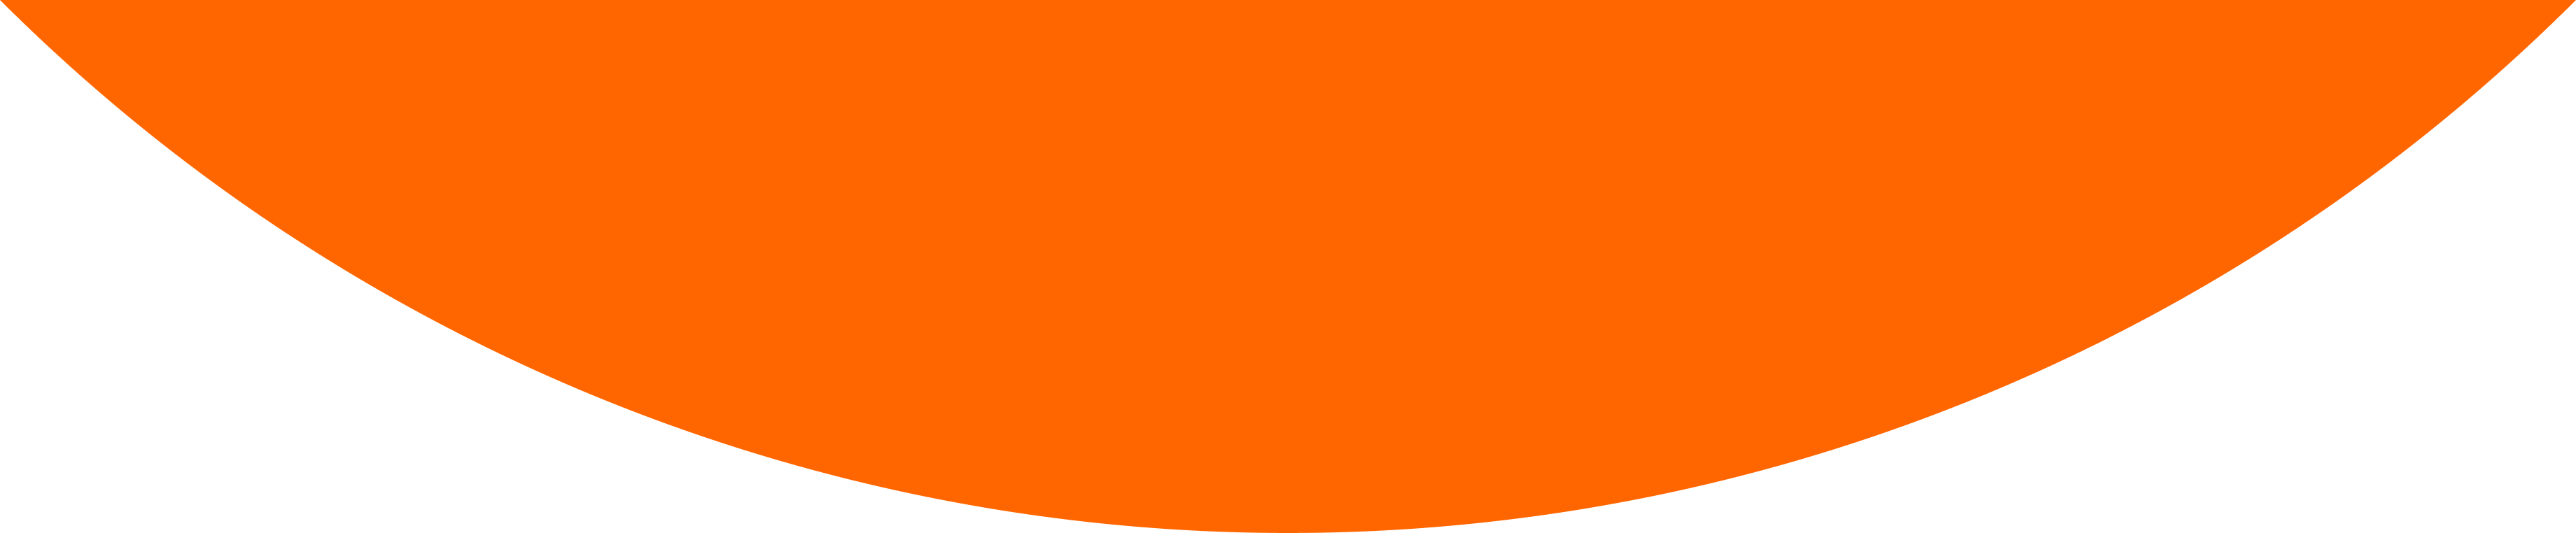 omniva orange